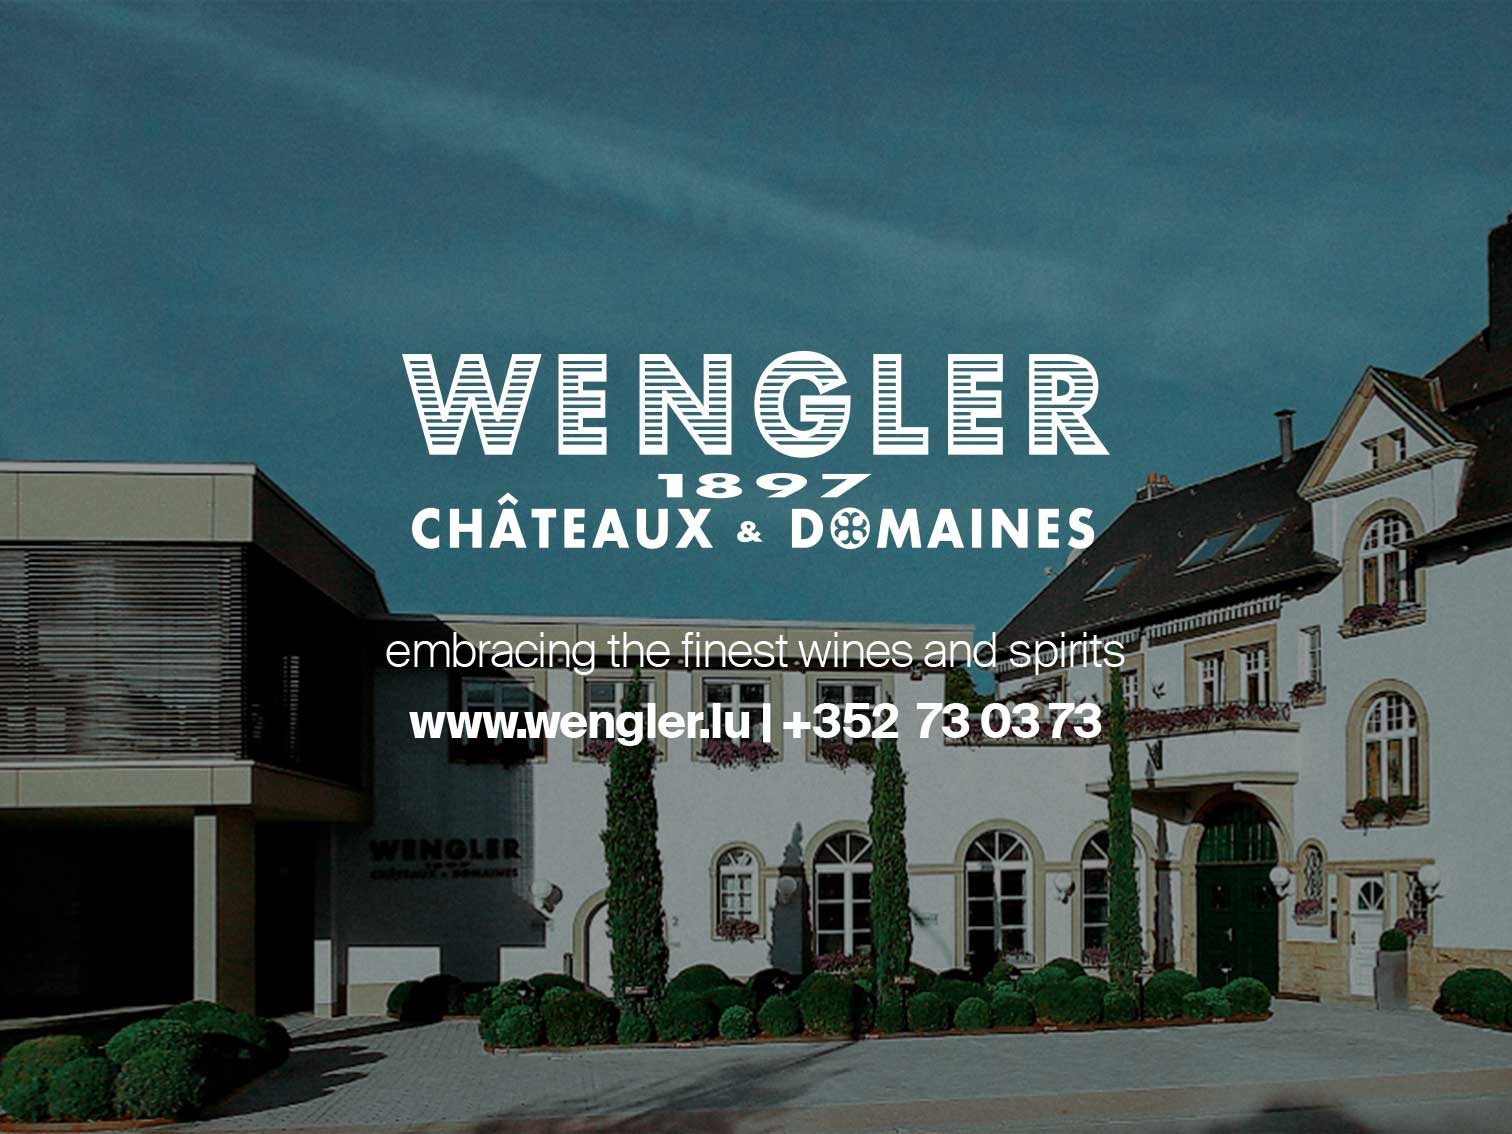 Eminente - Wengler Châteaux & Domaines